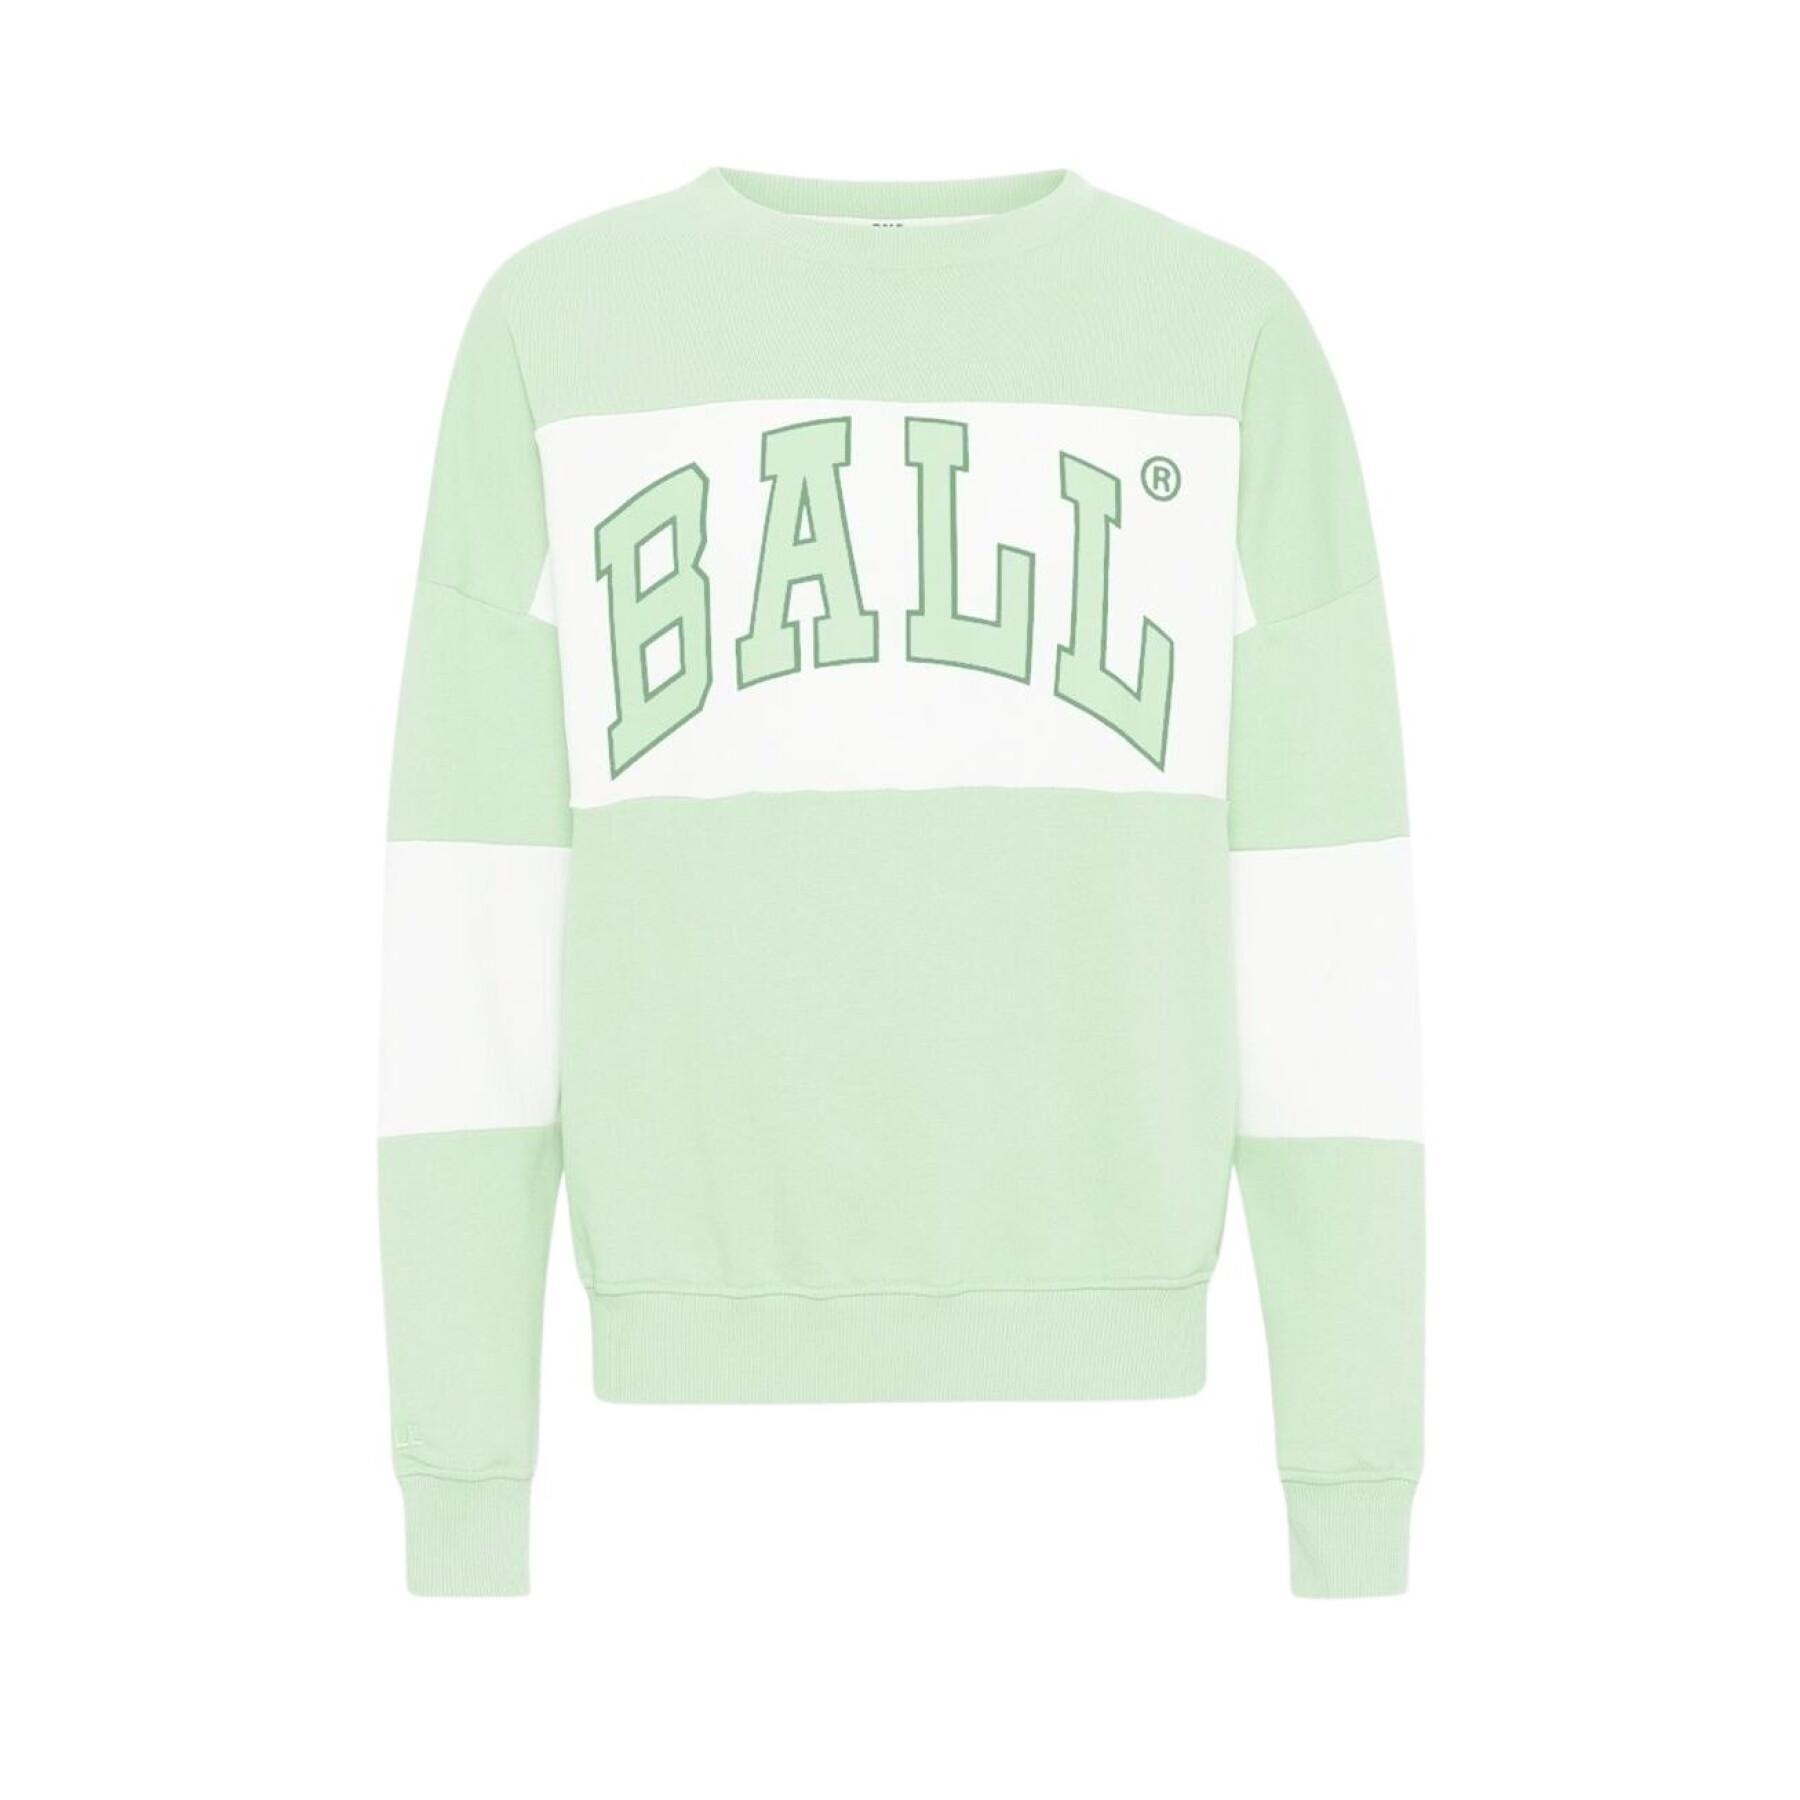 Sweatshirt Ball J. Robinson